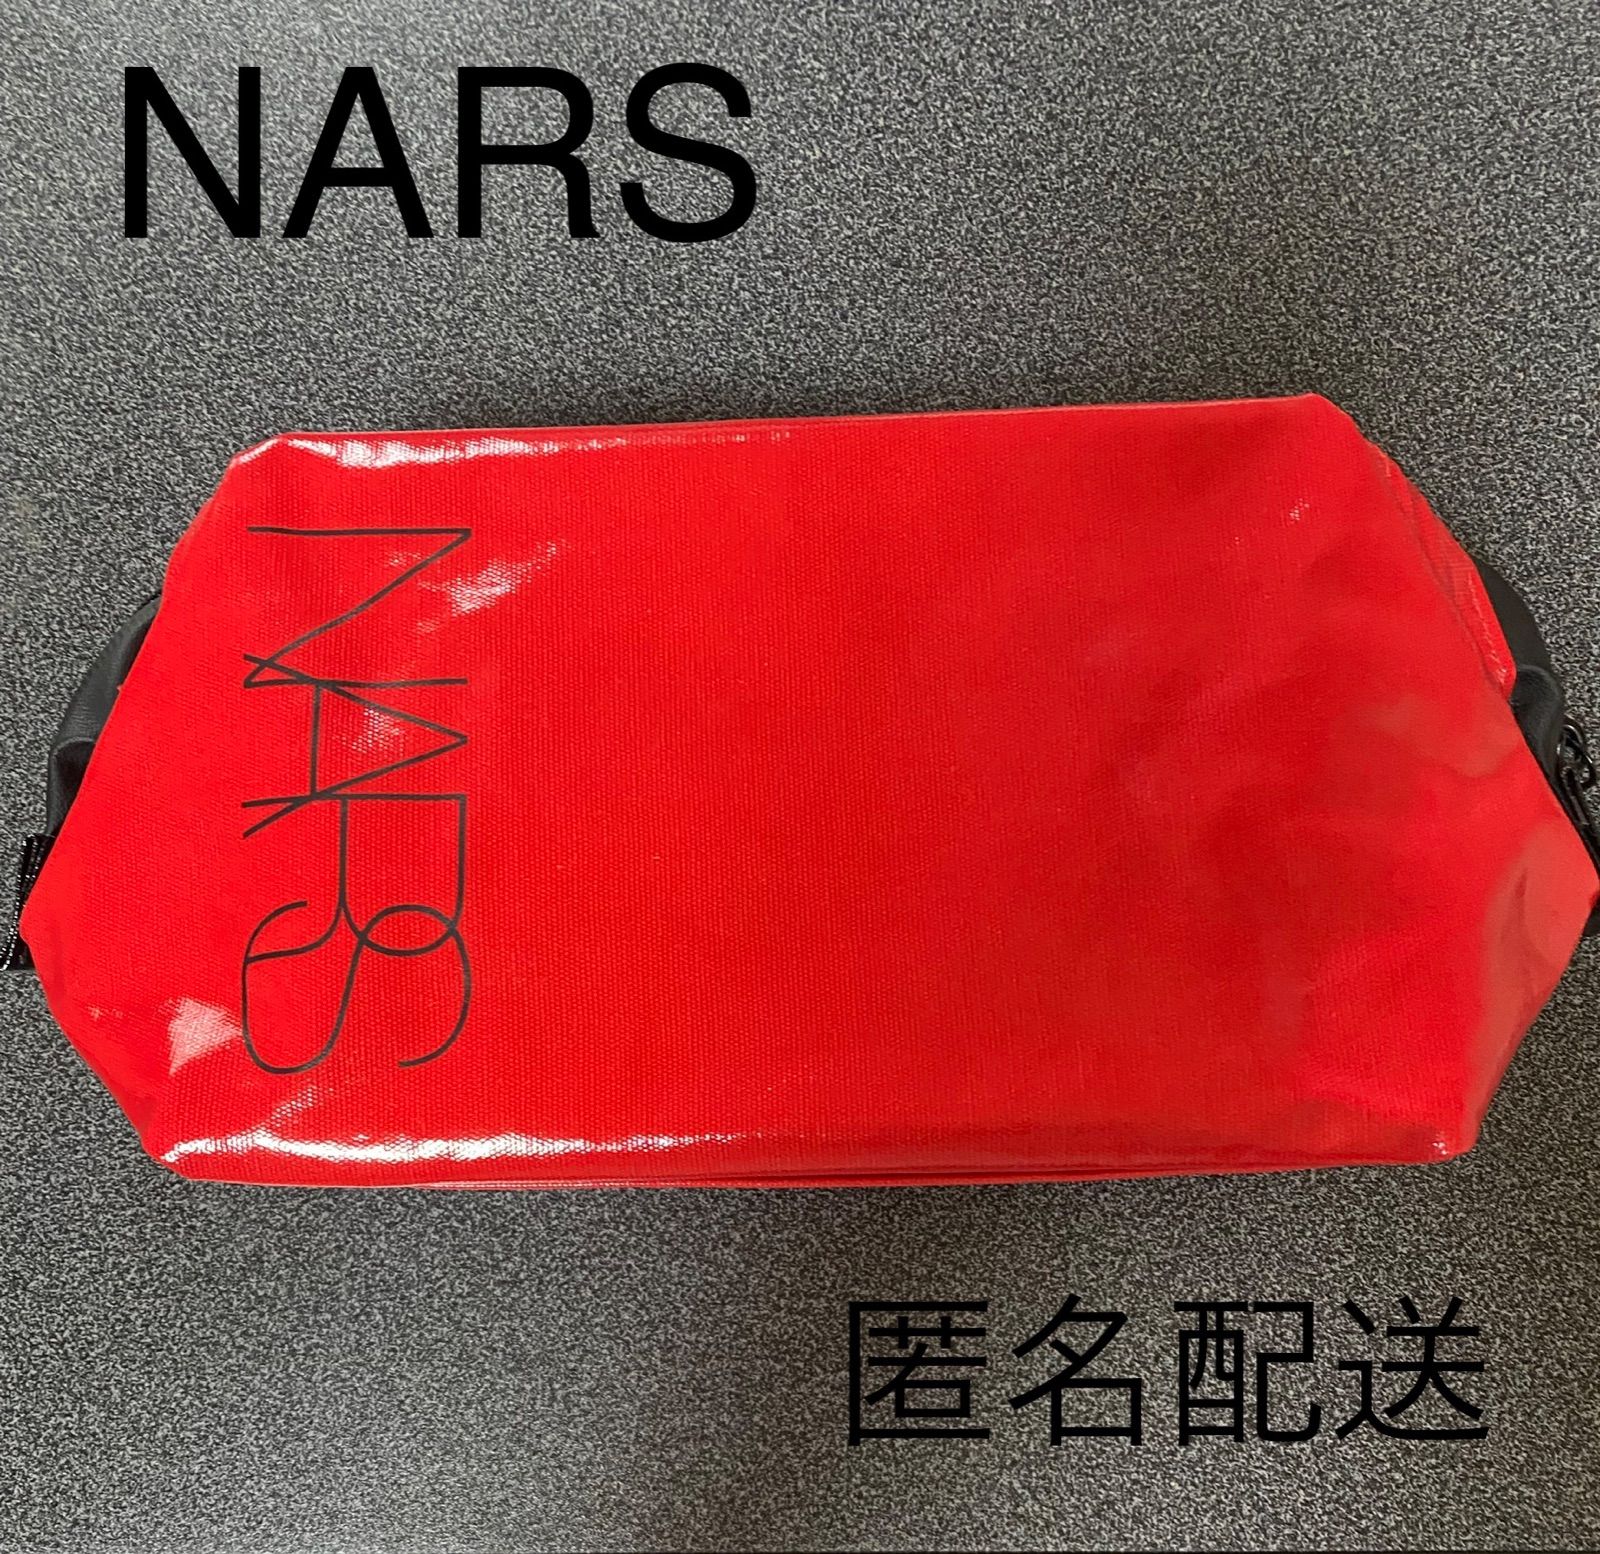 NARS ナーズ ポーチ ピンク - メイク道具・化粧小物